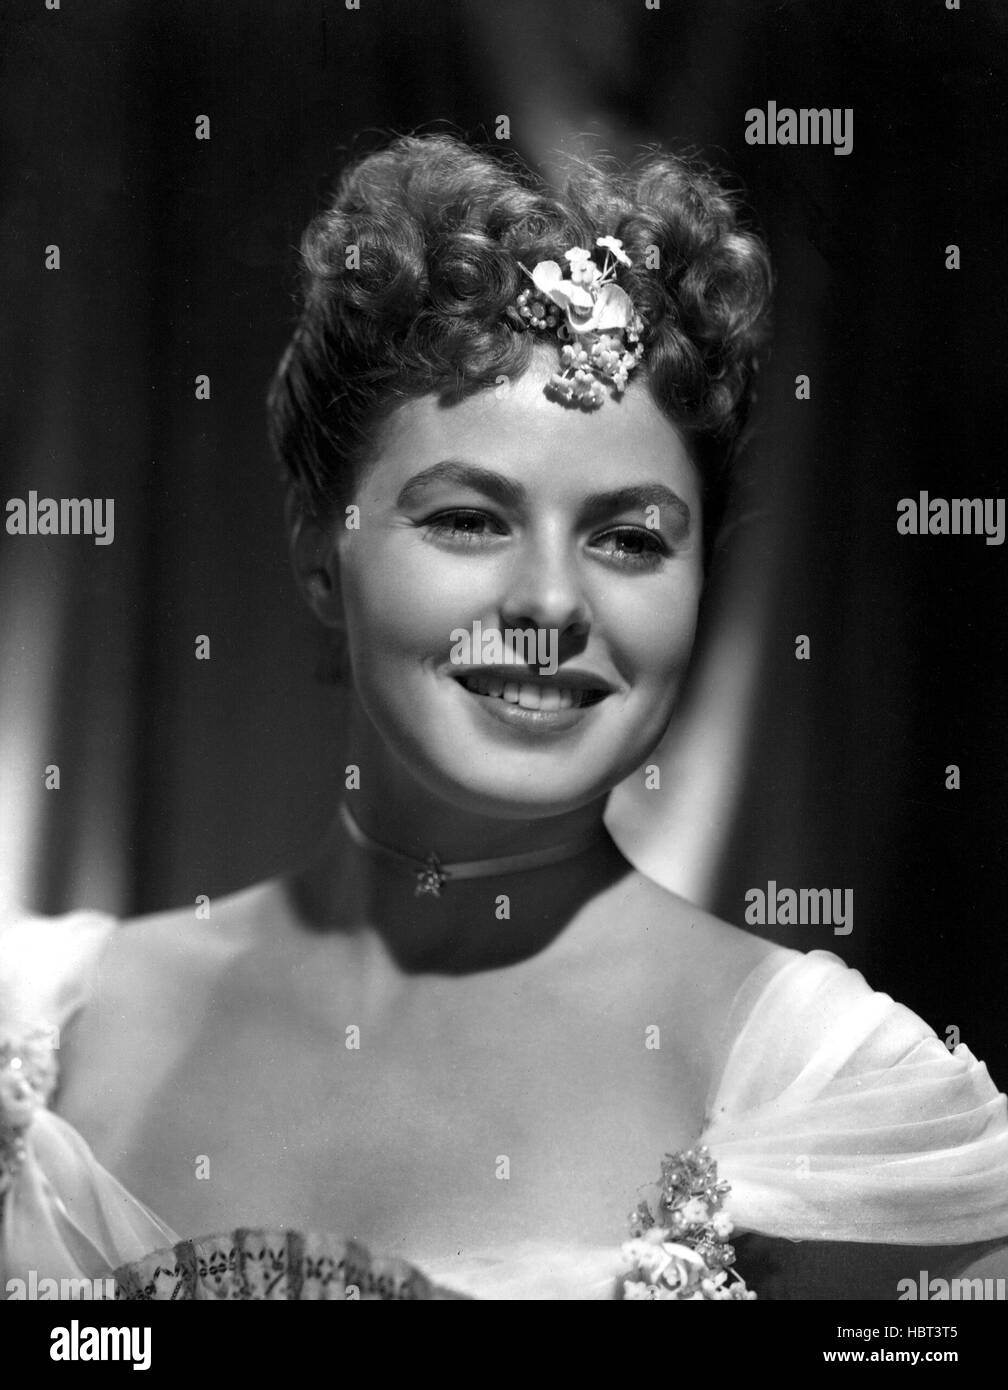 GASLIGHT, Ingrid Bergman, 1944 Stock Photo - Alamy